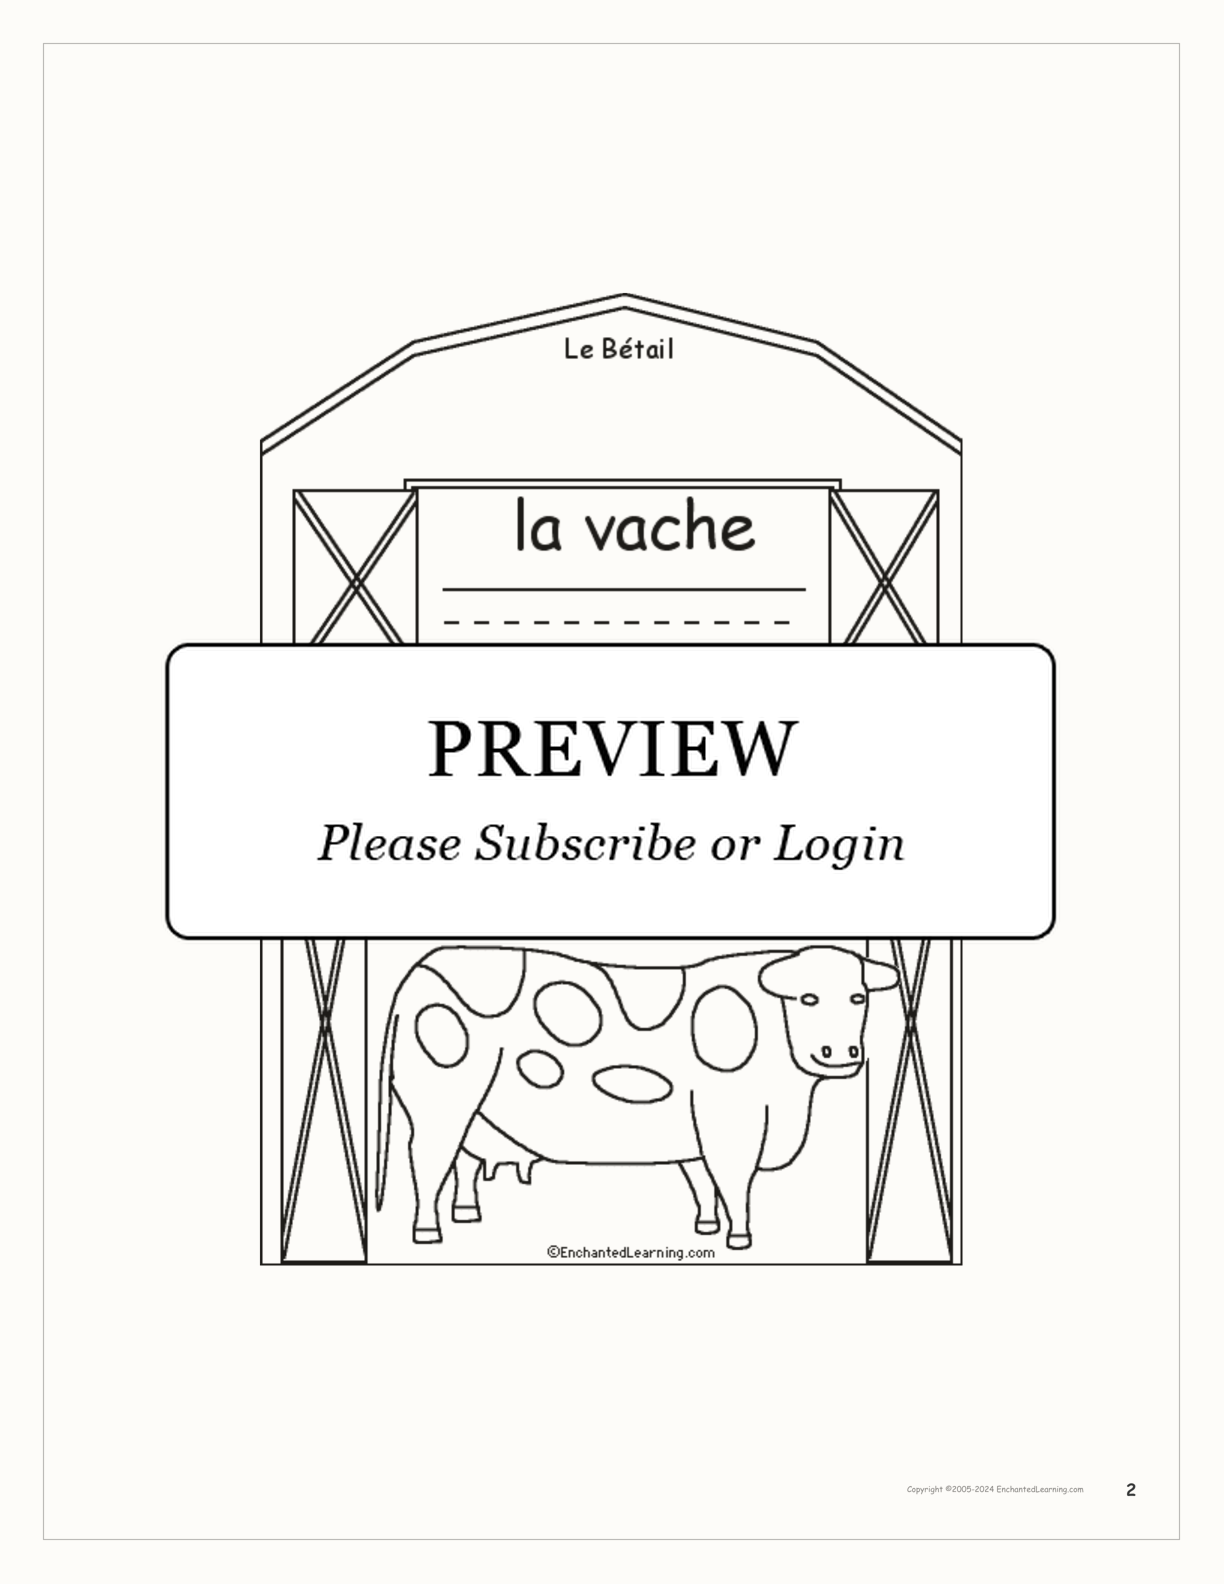 Bétail (Livestock) interactive printout page 2